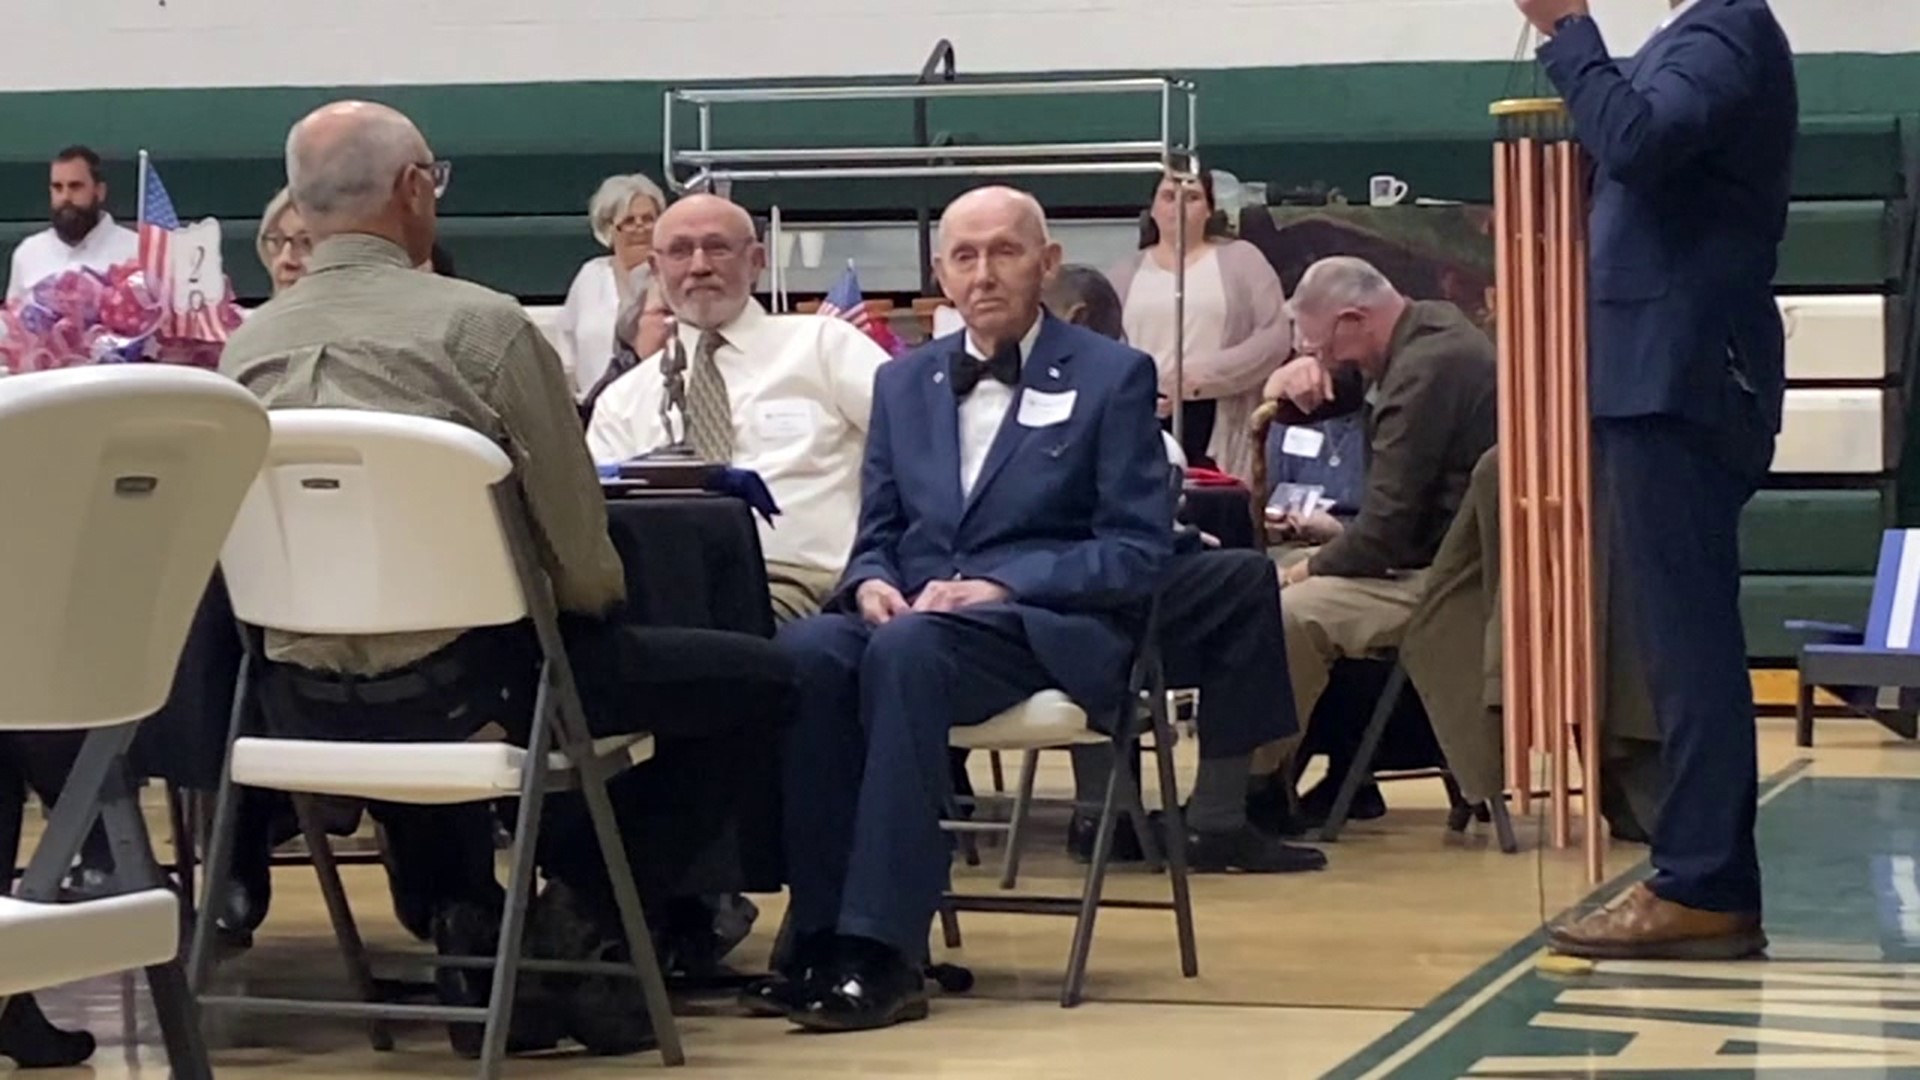 Folks came together Saturday night to honor local World War II Veteran Harold Gary.